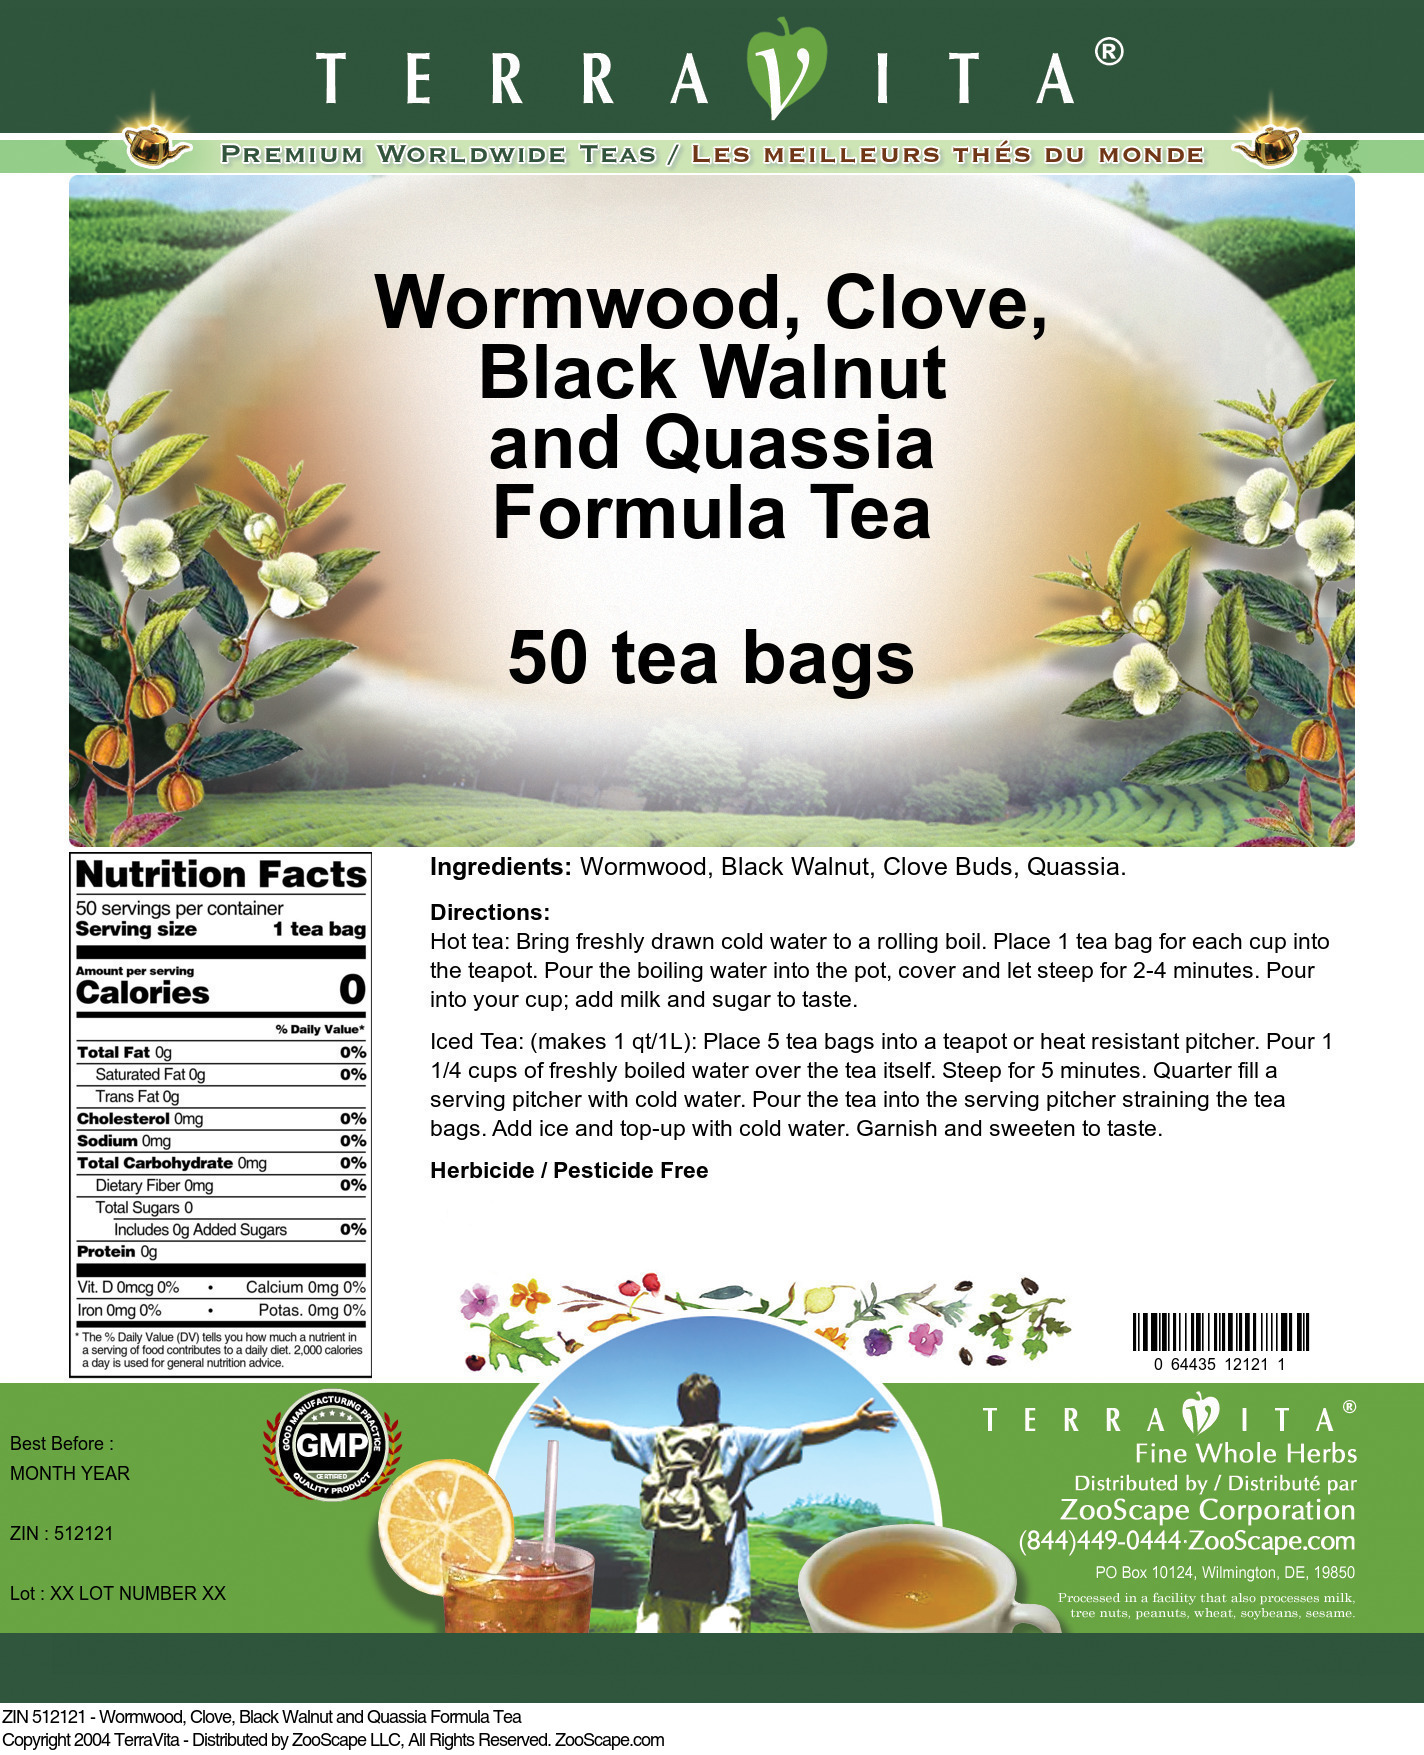 Wormwood, Clove, Black Walnut and Quassi Formula Tea - Label